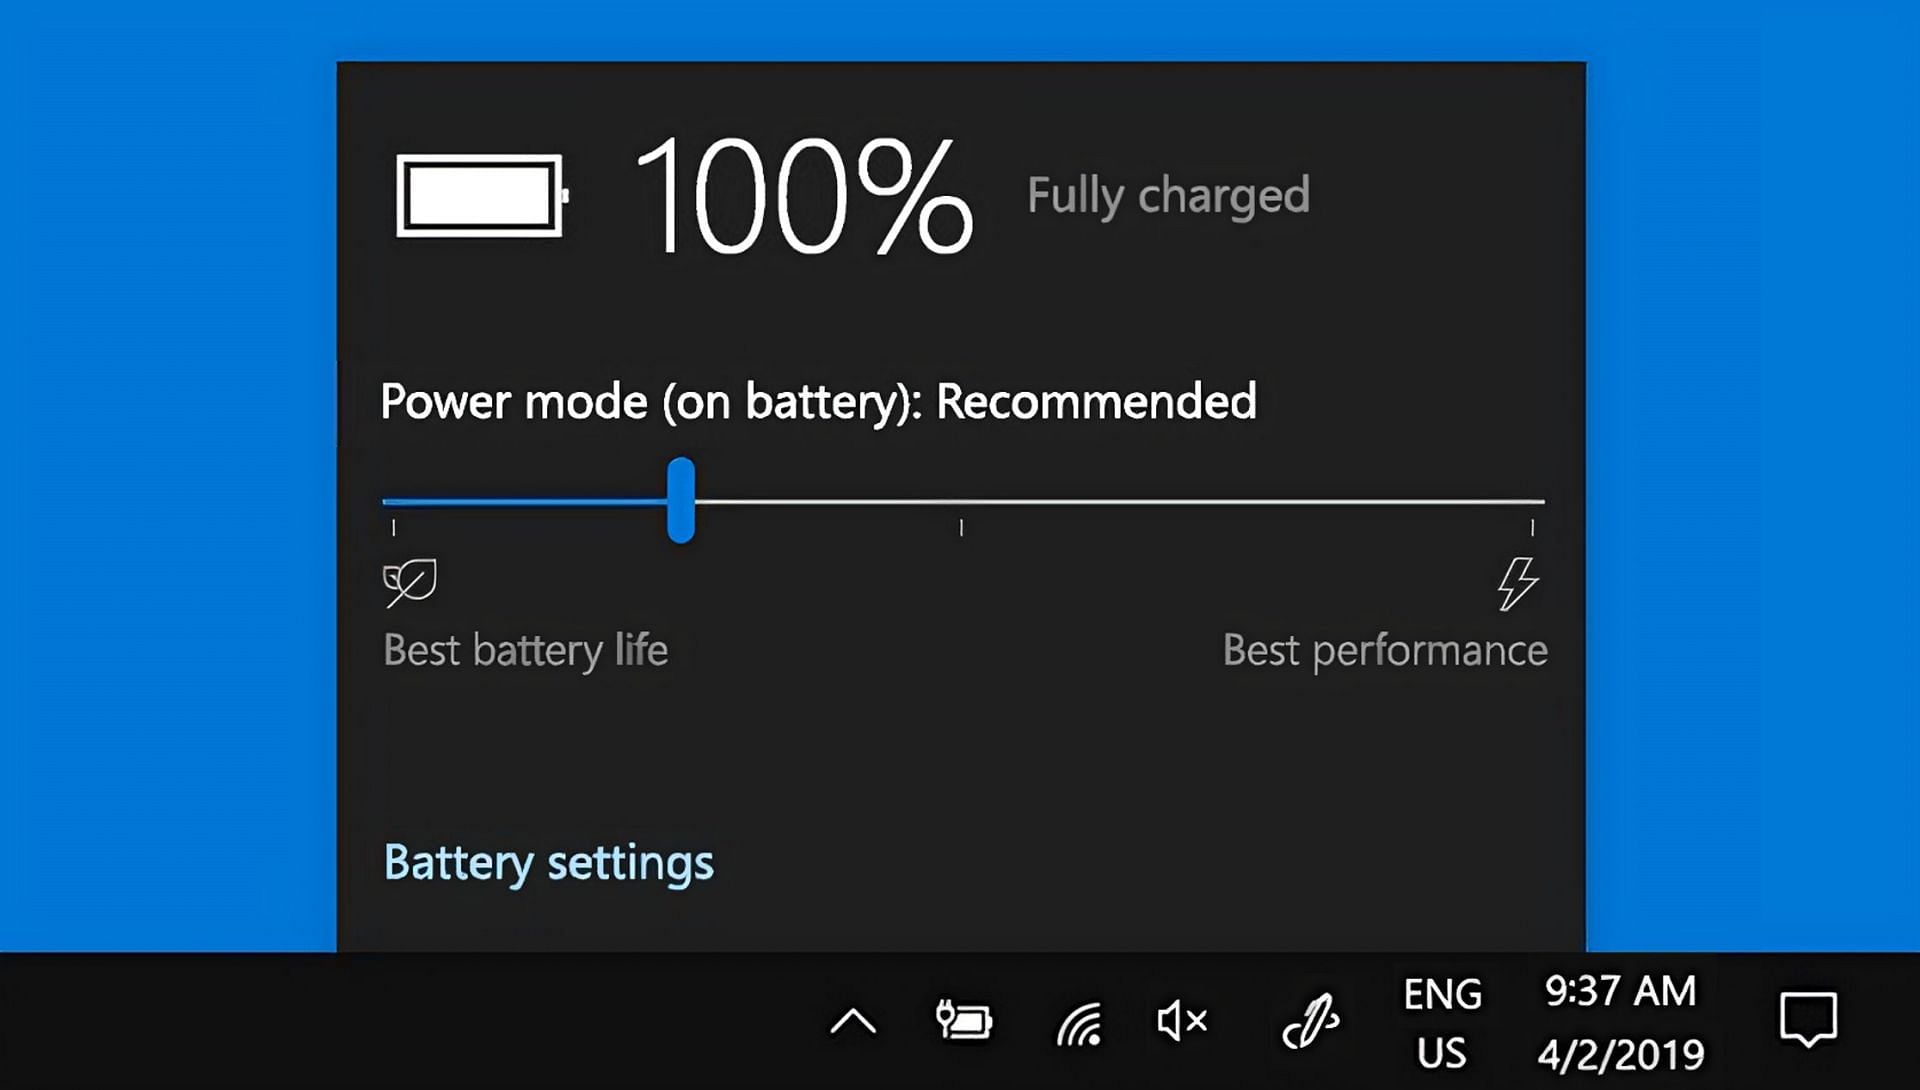 Turn on Battery Saver mode (Image via Microsoft support)